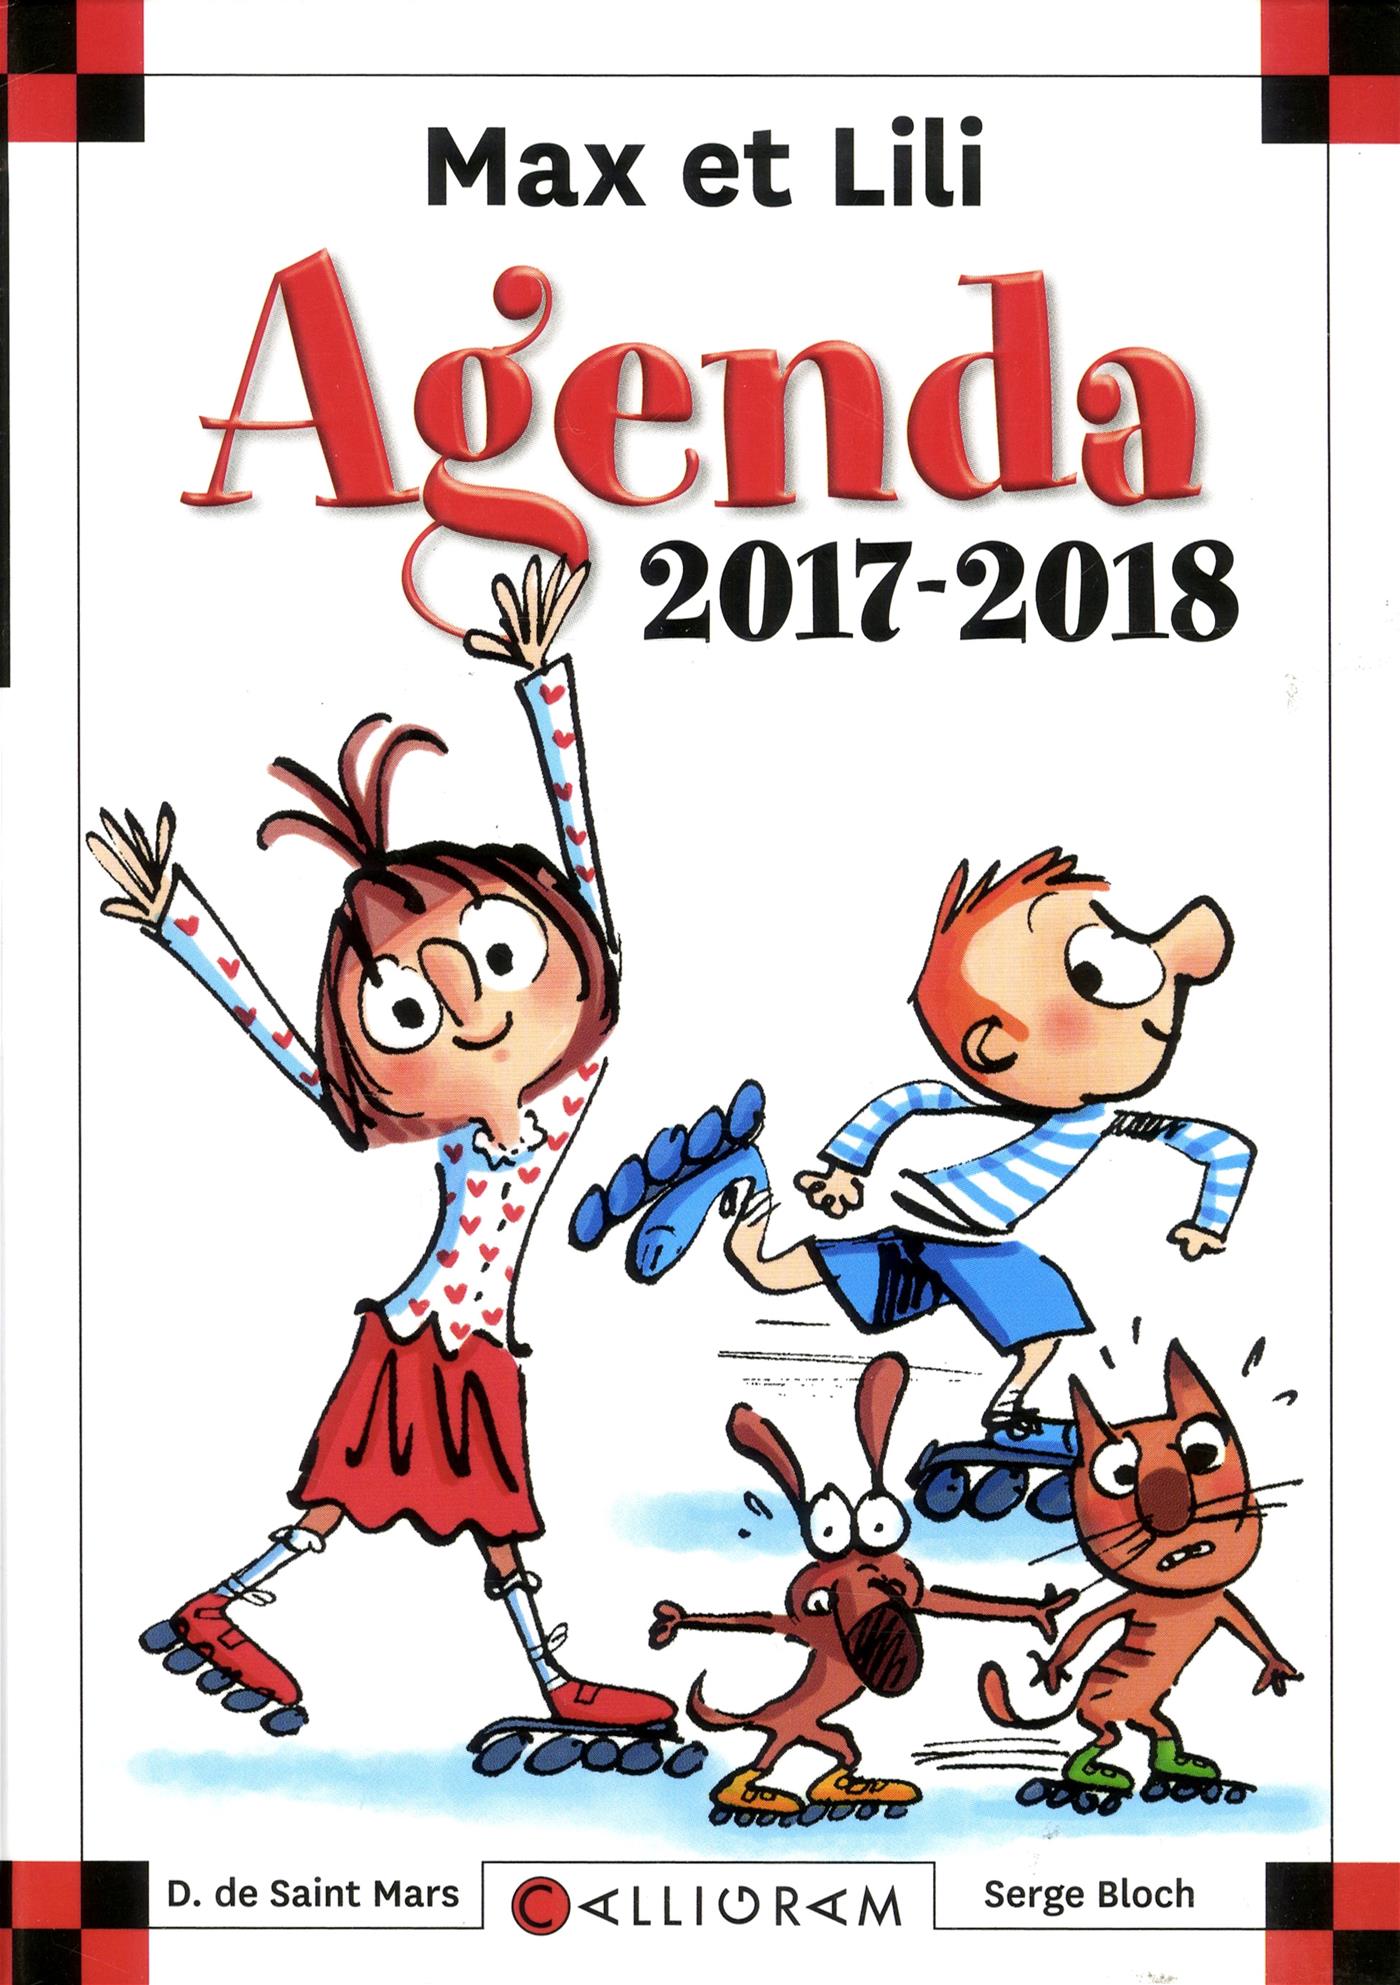 Agenda scolaire Max et Lili 2023-2024